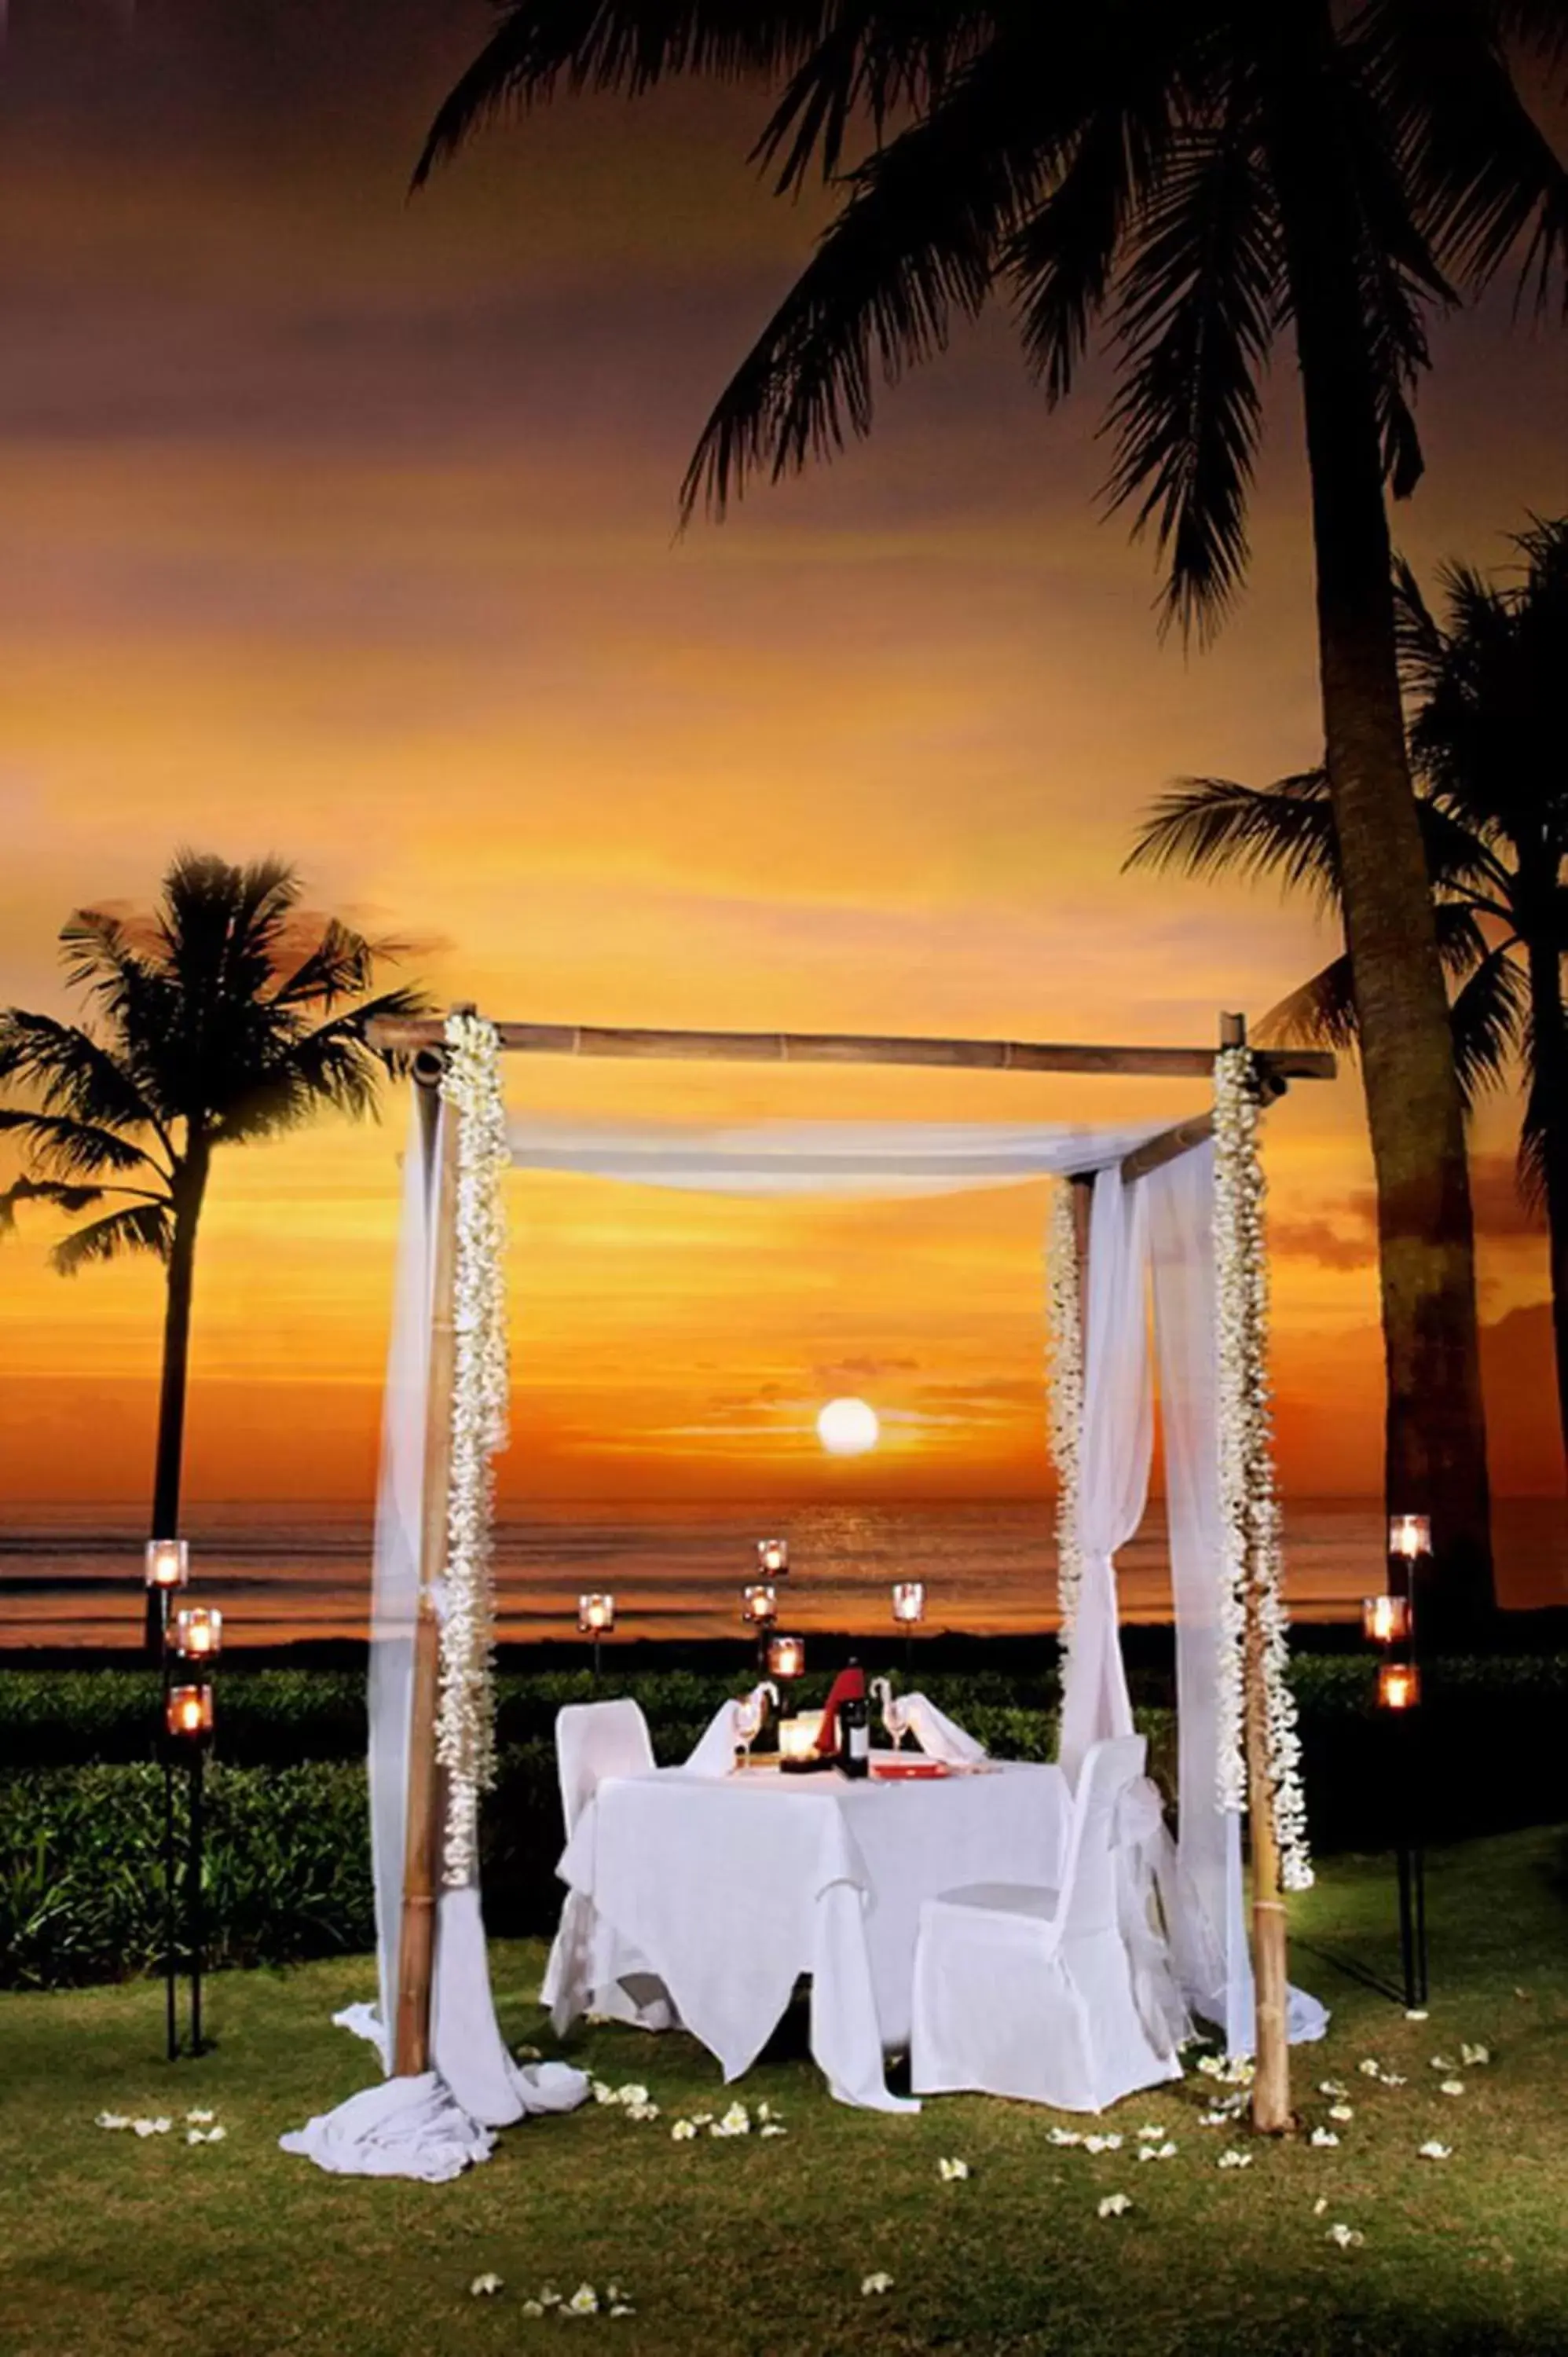 Banquet/Function facilities, Banquet Facilities in Bali Mandira Beach Resort & Spa